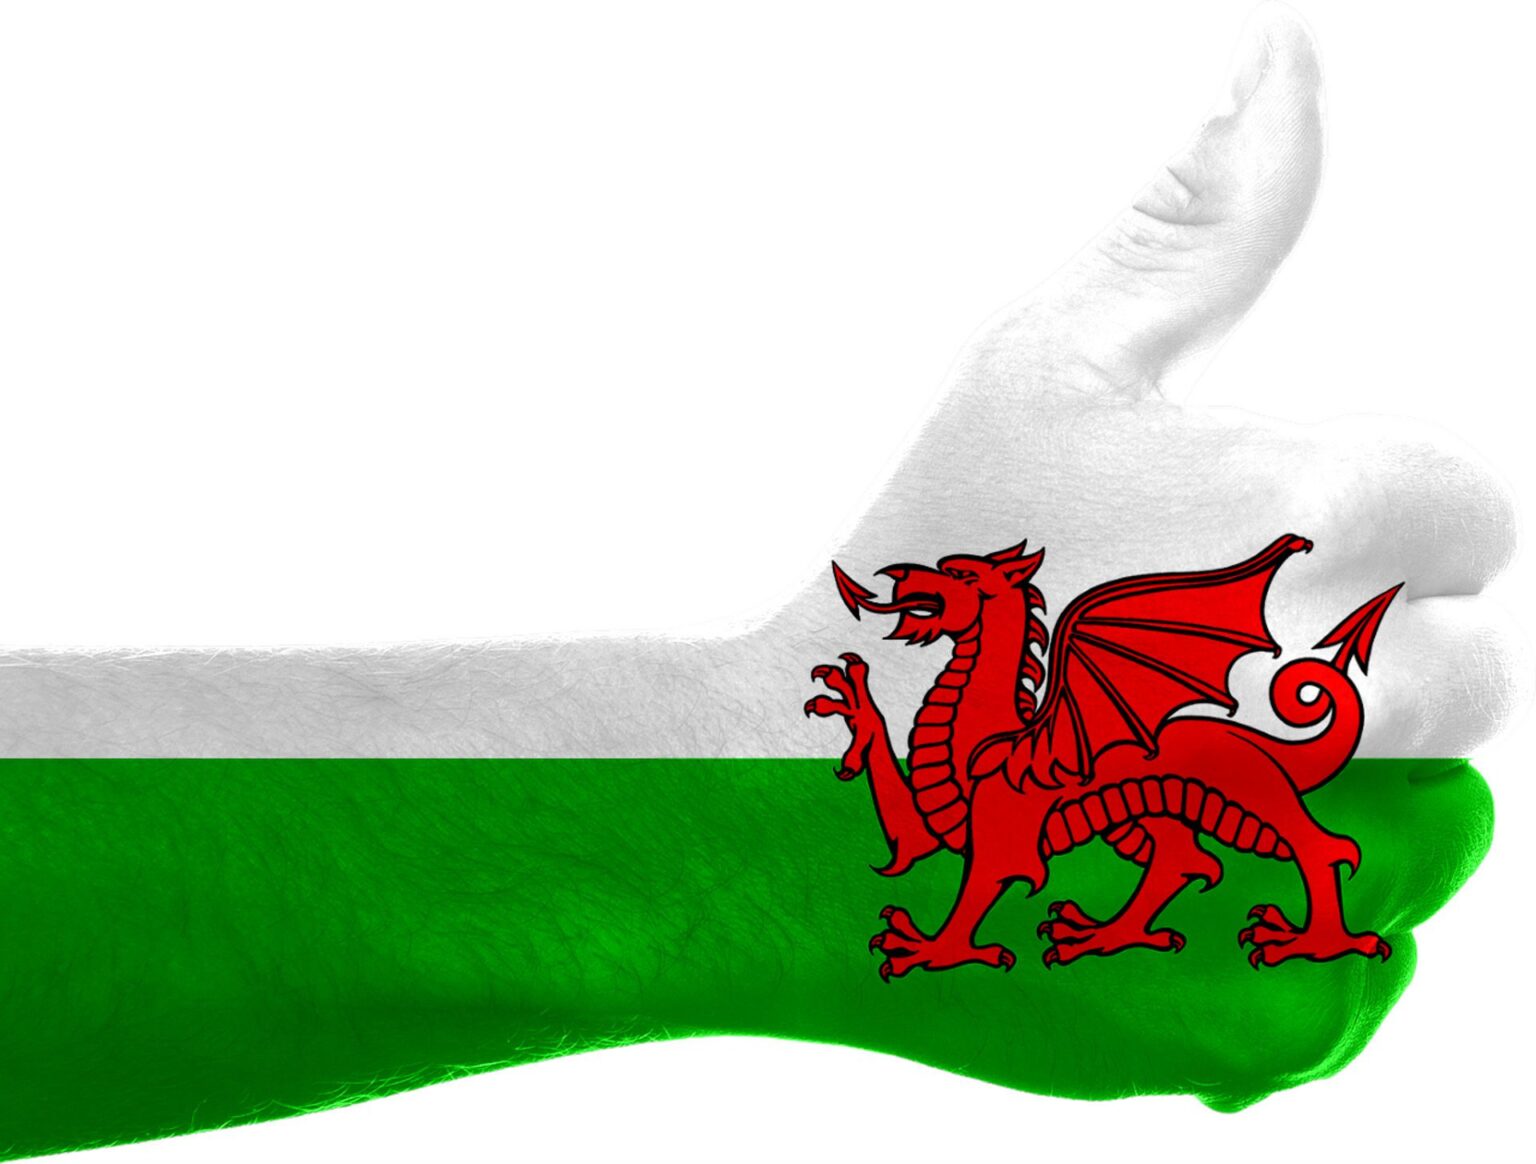 Wales flag wacky thumbs aloft